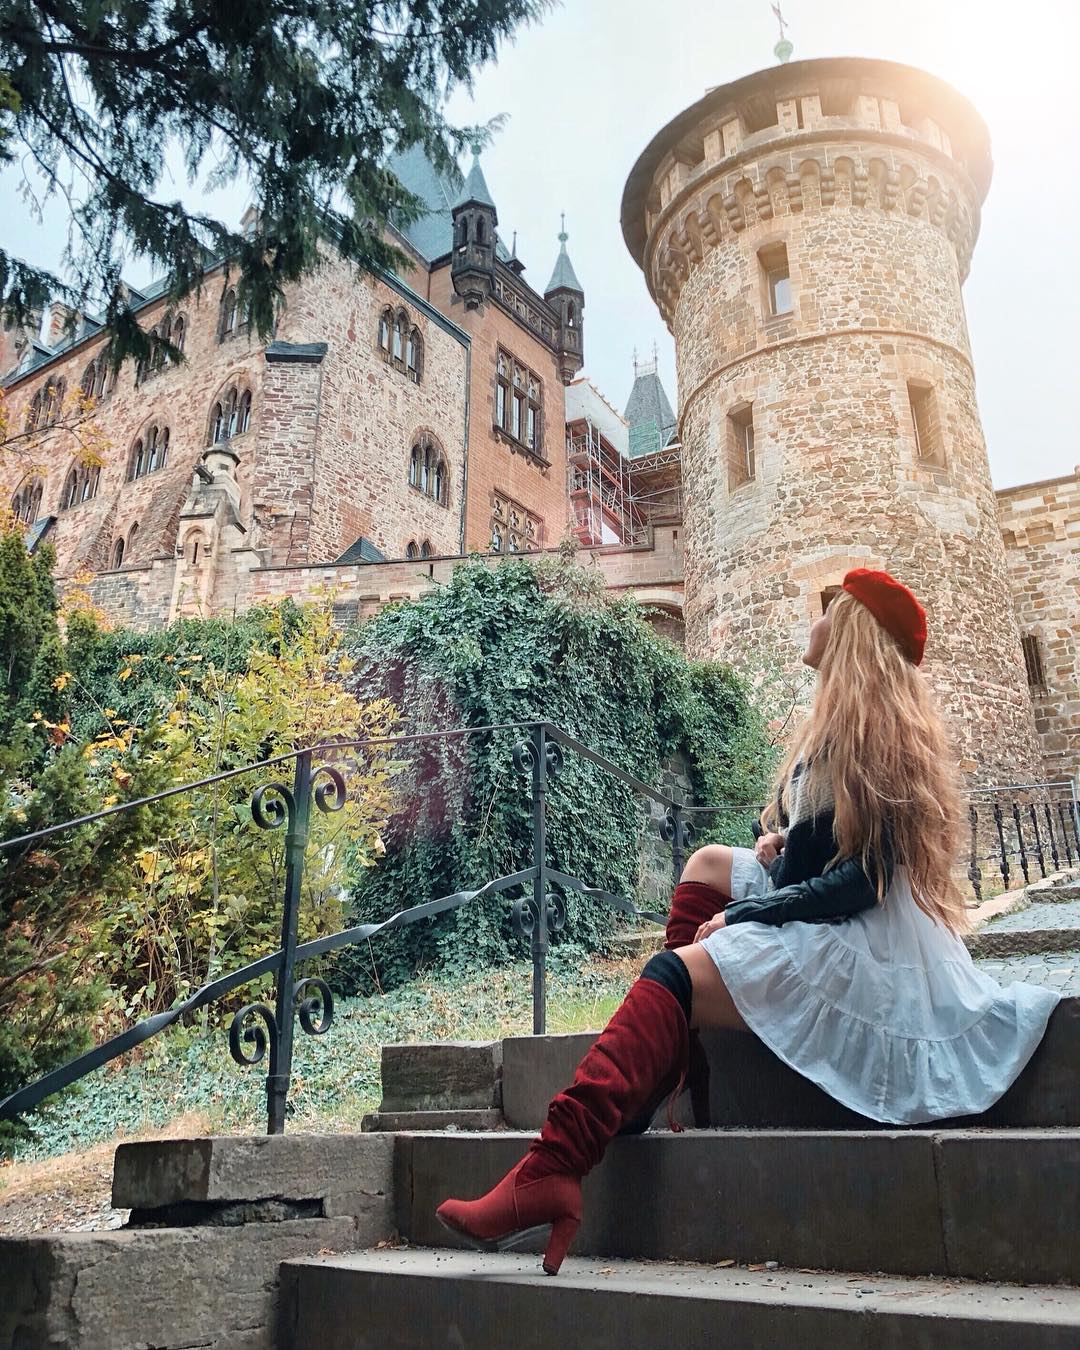 So in love with castles ❤️❤️❤️
#schlosswernigerode .
.
📸 by Mama 😊❤️
.
.
#wernigerode #schloss #castle #burg #harz #harzmountains #travel #inspo #girlsthatwander #visitgermany #iamtb #travelgirl #travelblogger #nomad #traveltheworld #exploregermany #germany #deutschland #fashion #fallfashion #herbst #autumn #autumnfashion #europetravel #europe